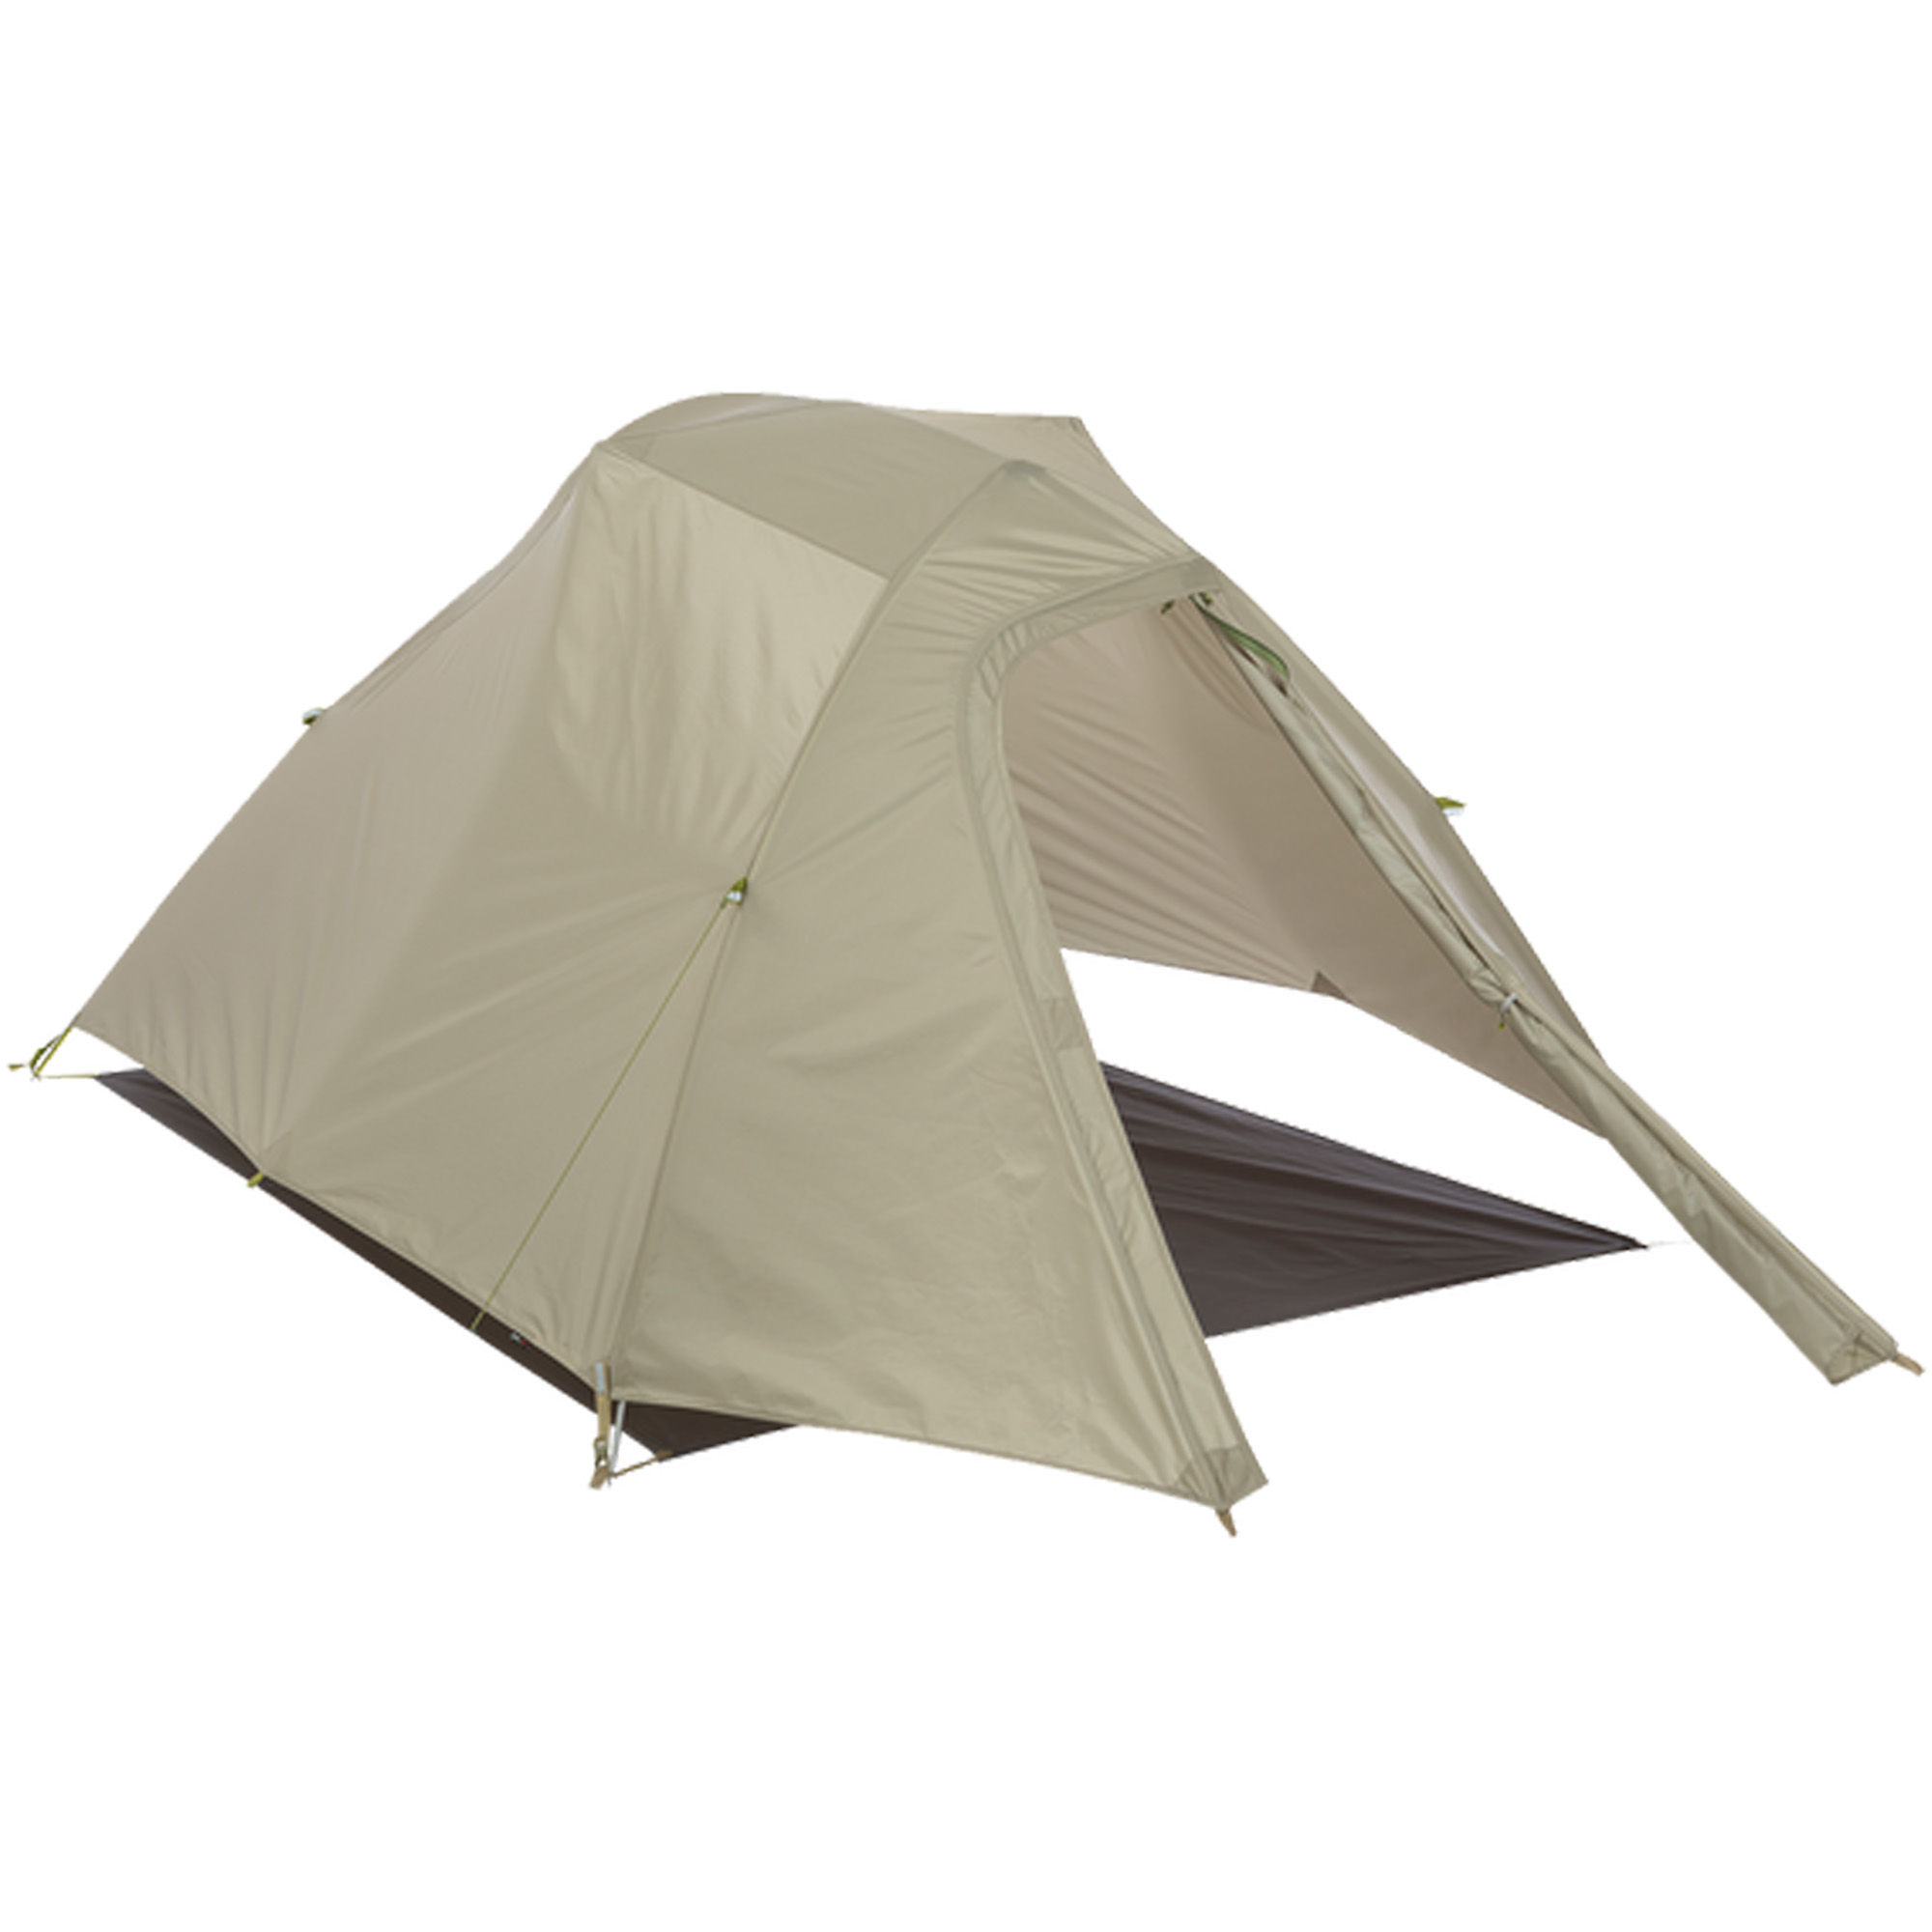 Big Agnes C-Bar 3 Lightweight Backpacking Tent